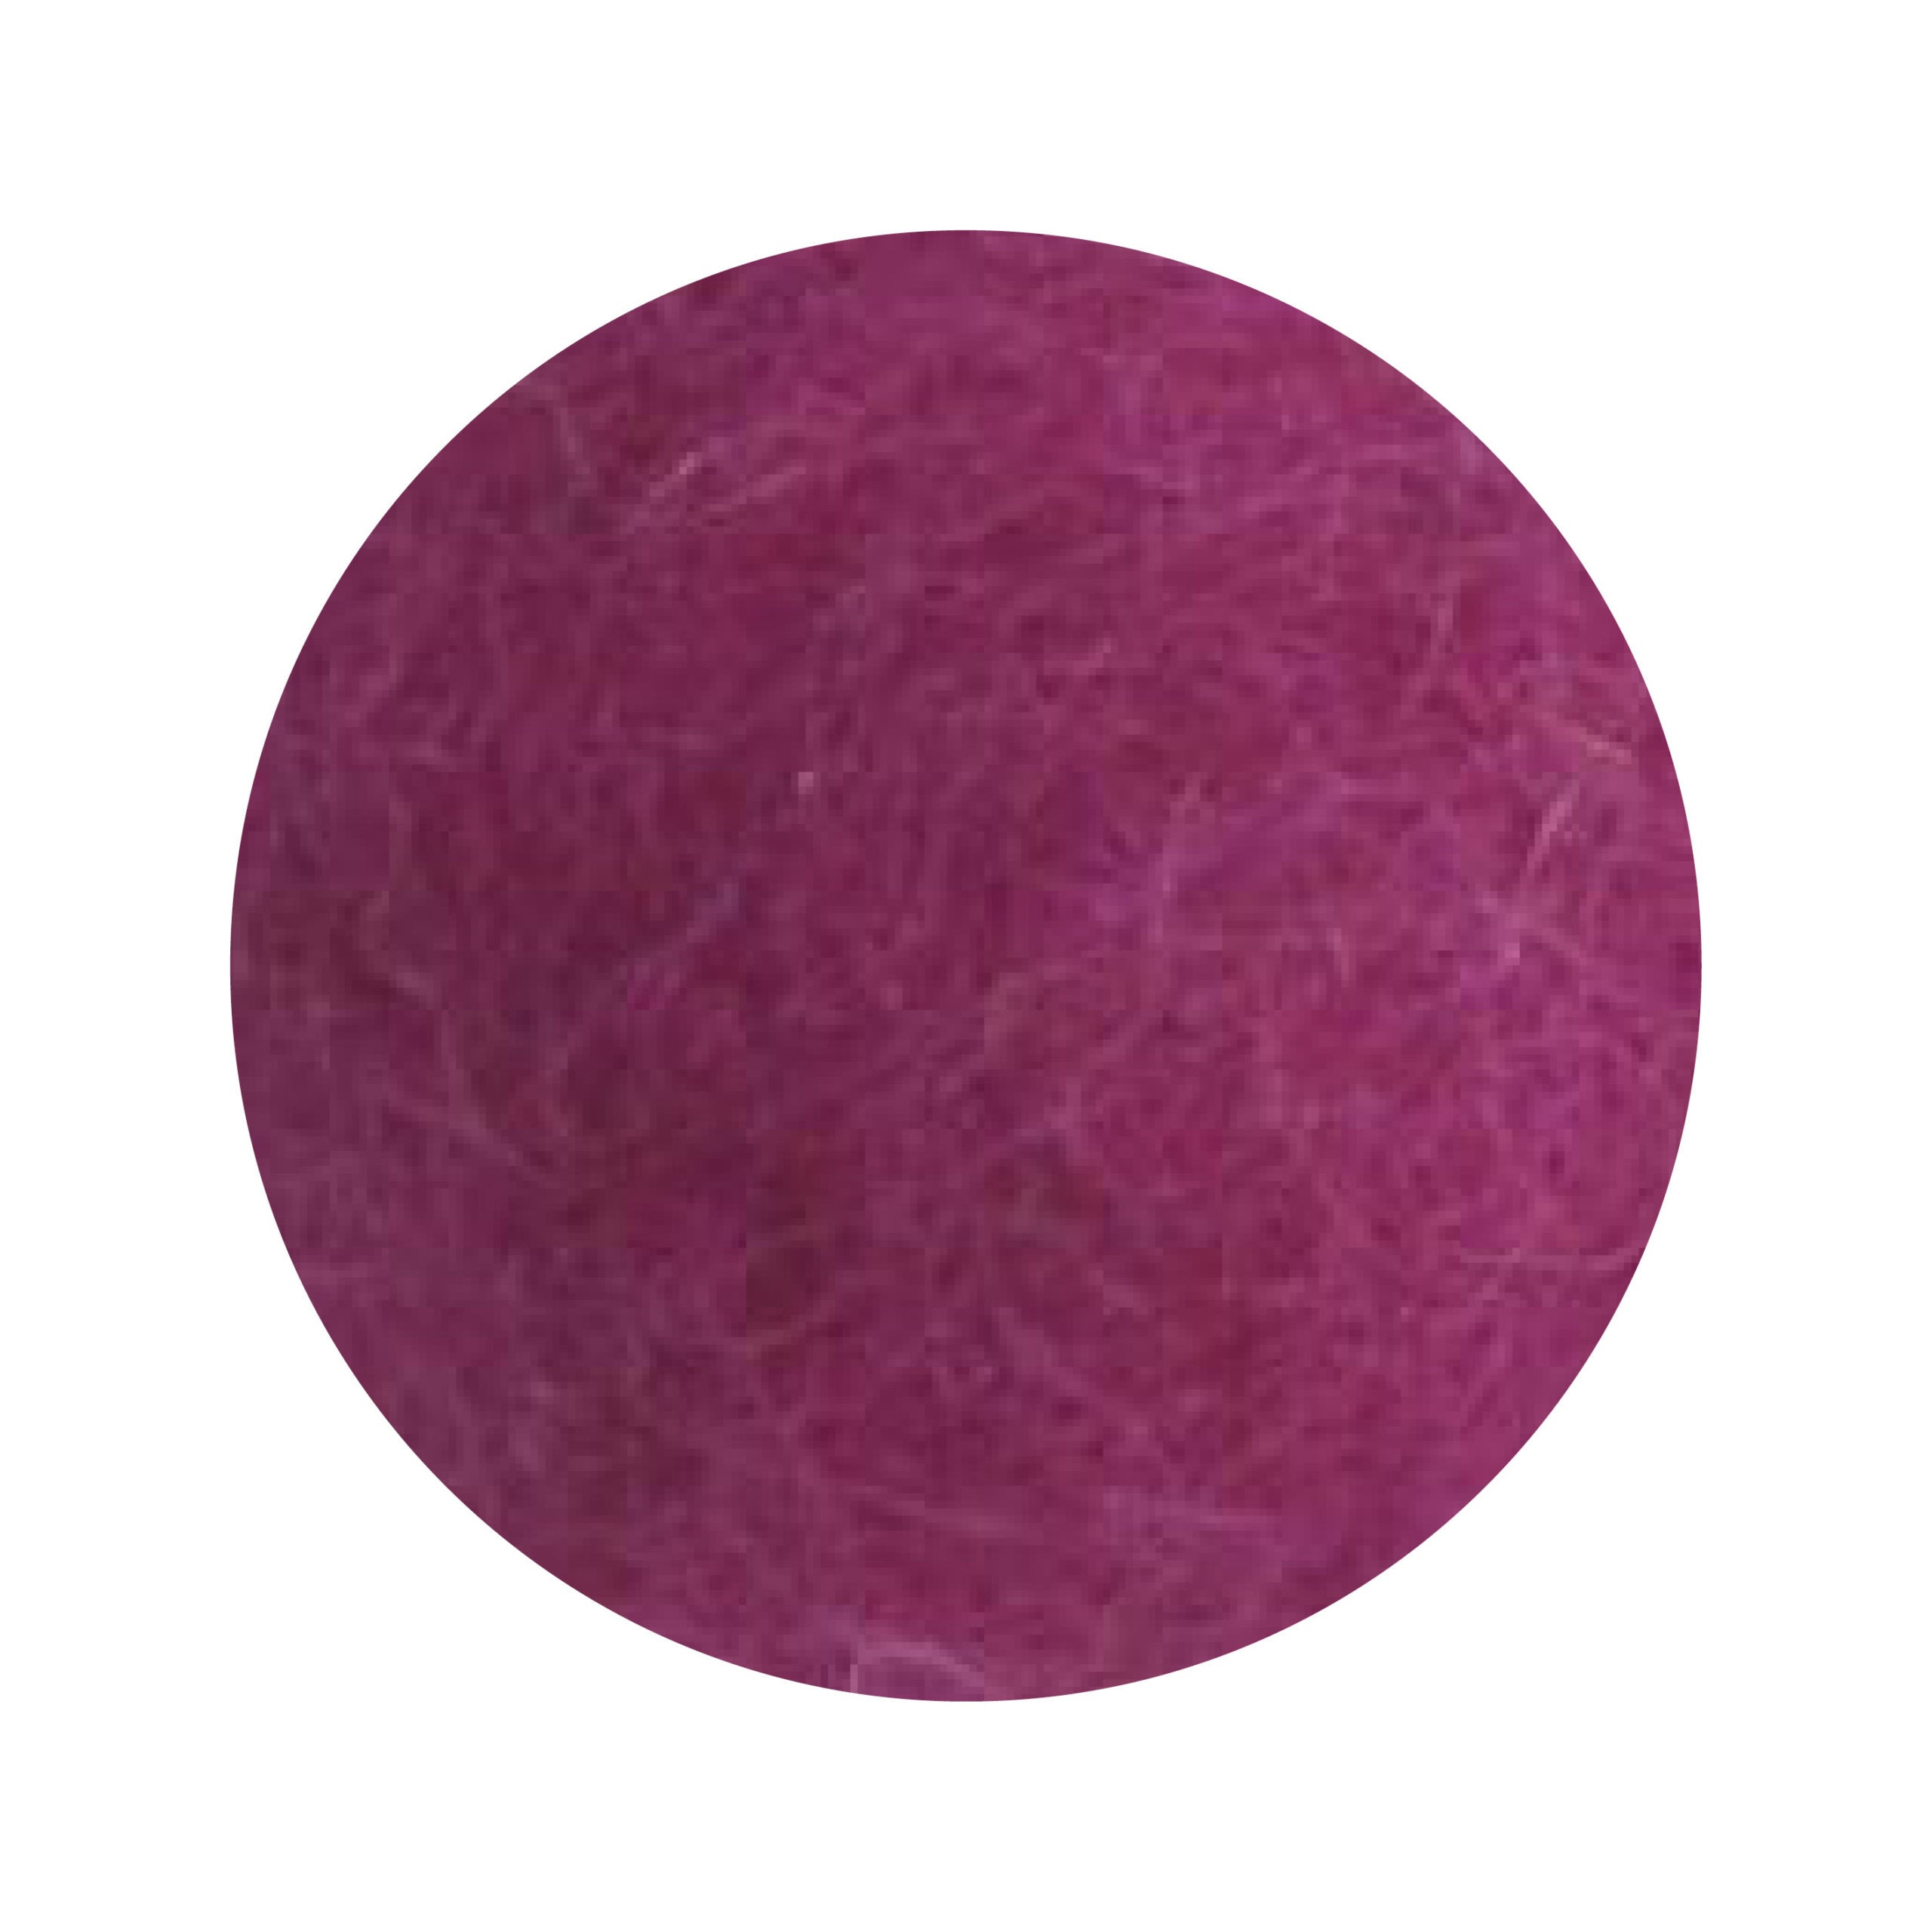 Felt Flowers - Blossom Medium - Purple (Dark)